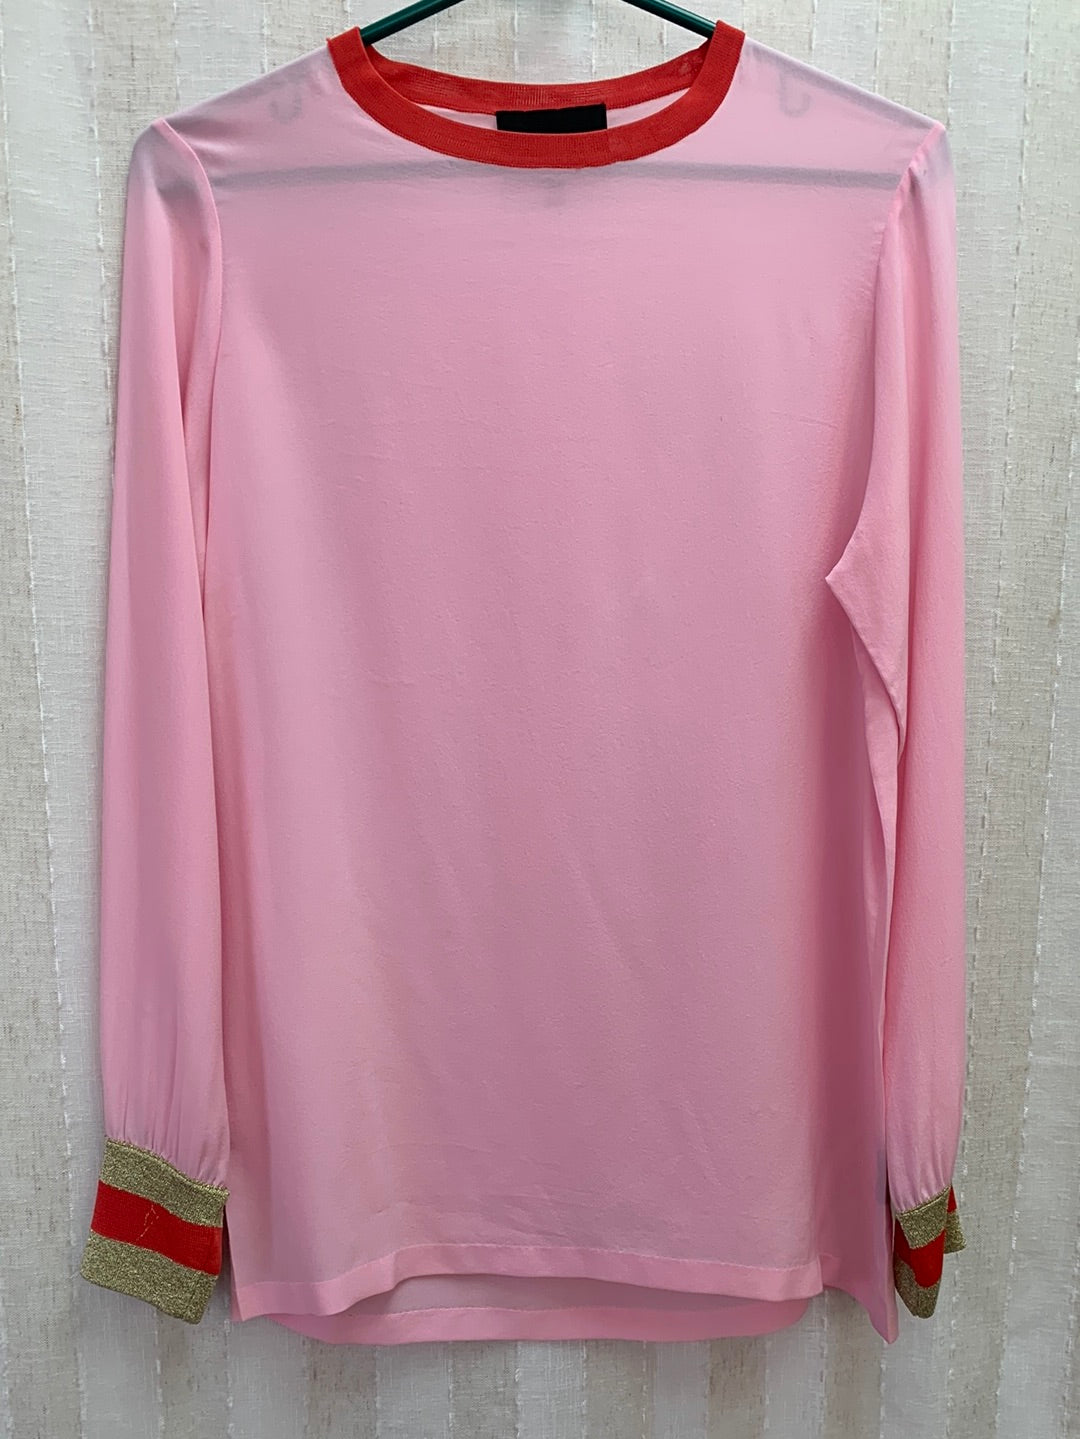 CYNTHIA ROWLEY pink orange gold Silk Long Sleeve Blouse - Small